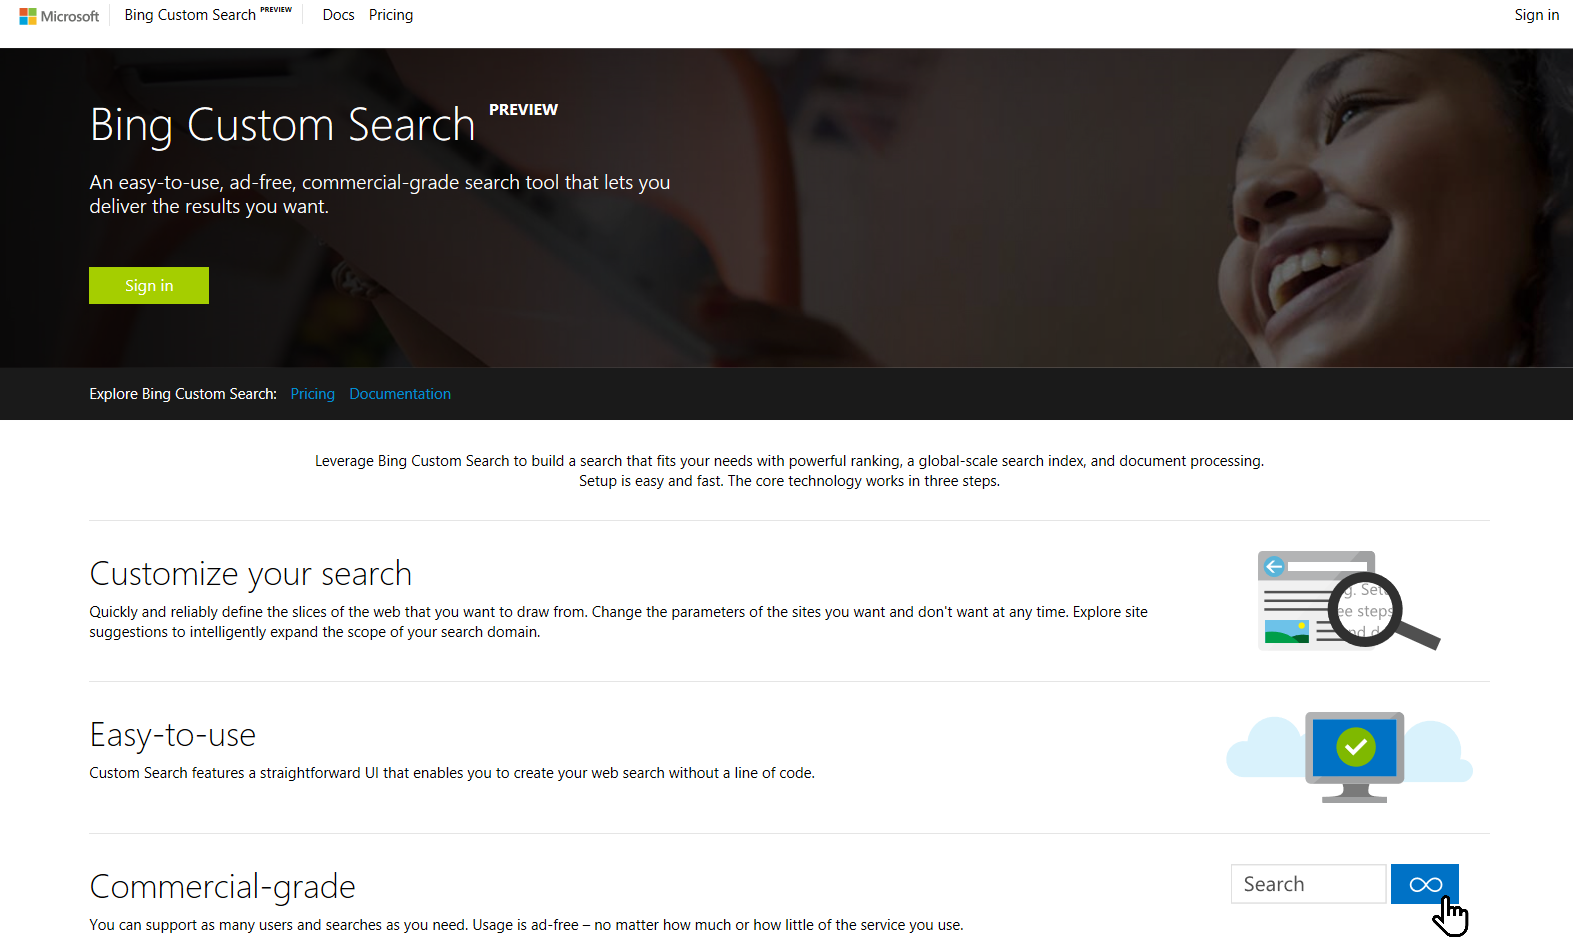 Bing Custom Search Preview webpage